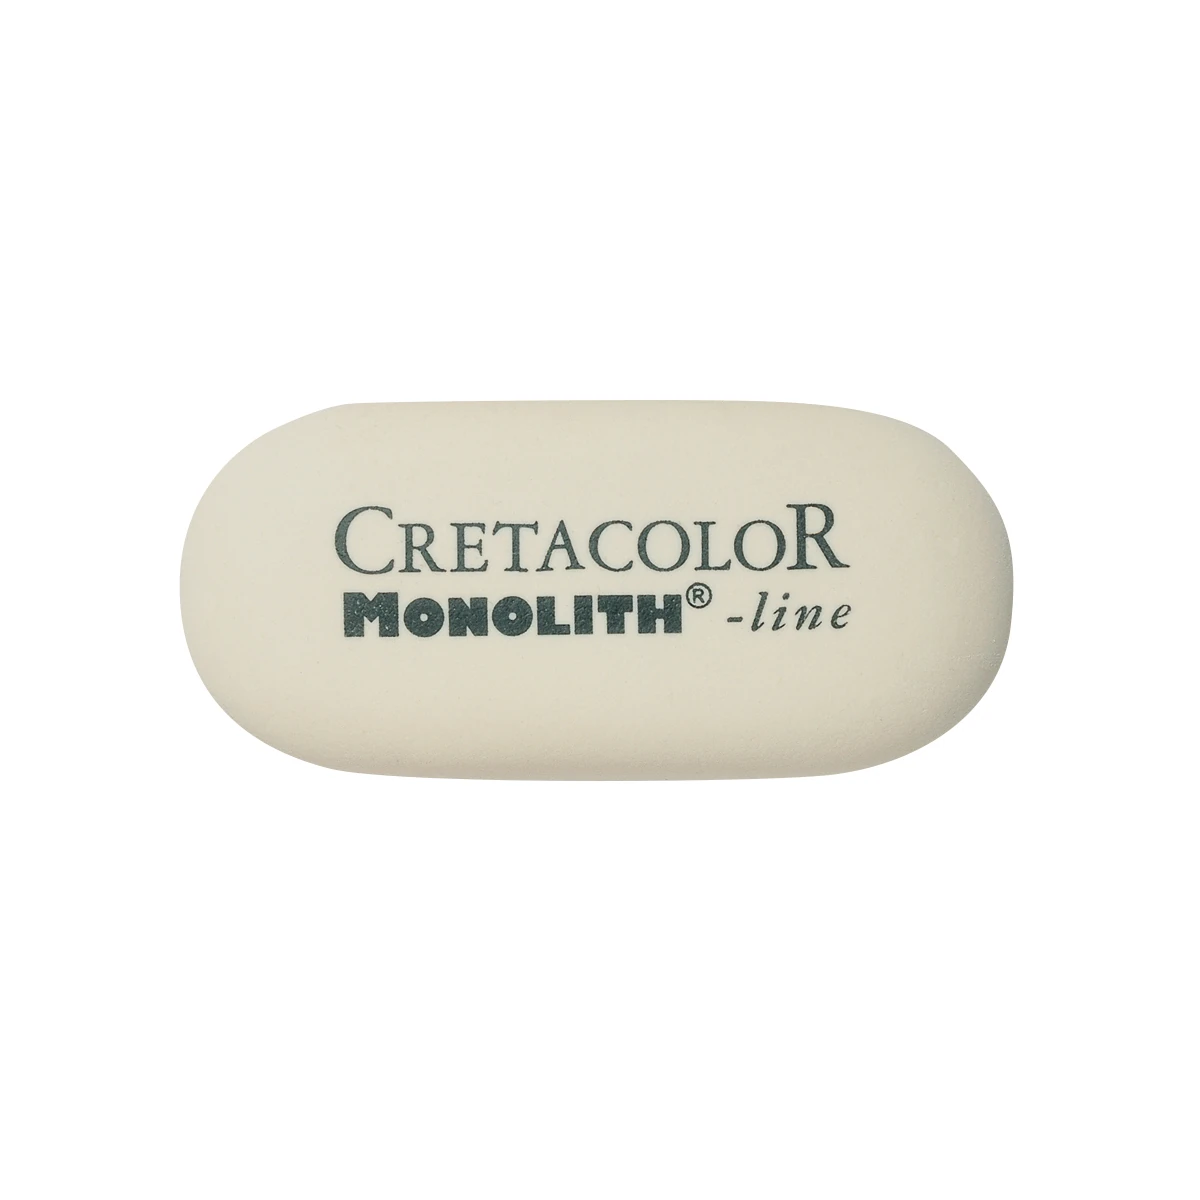 Cretacolor Monolith Small Eraser / Rubber